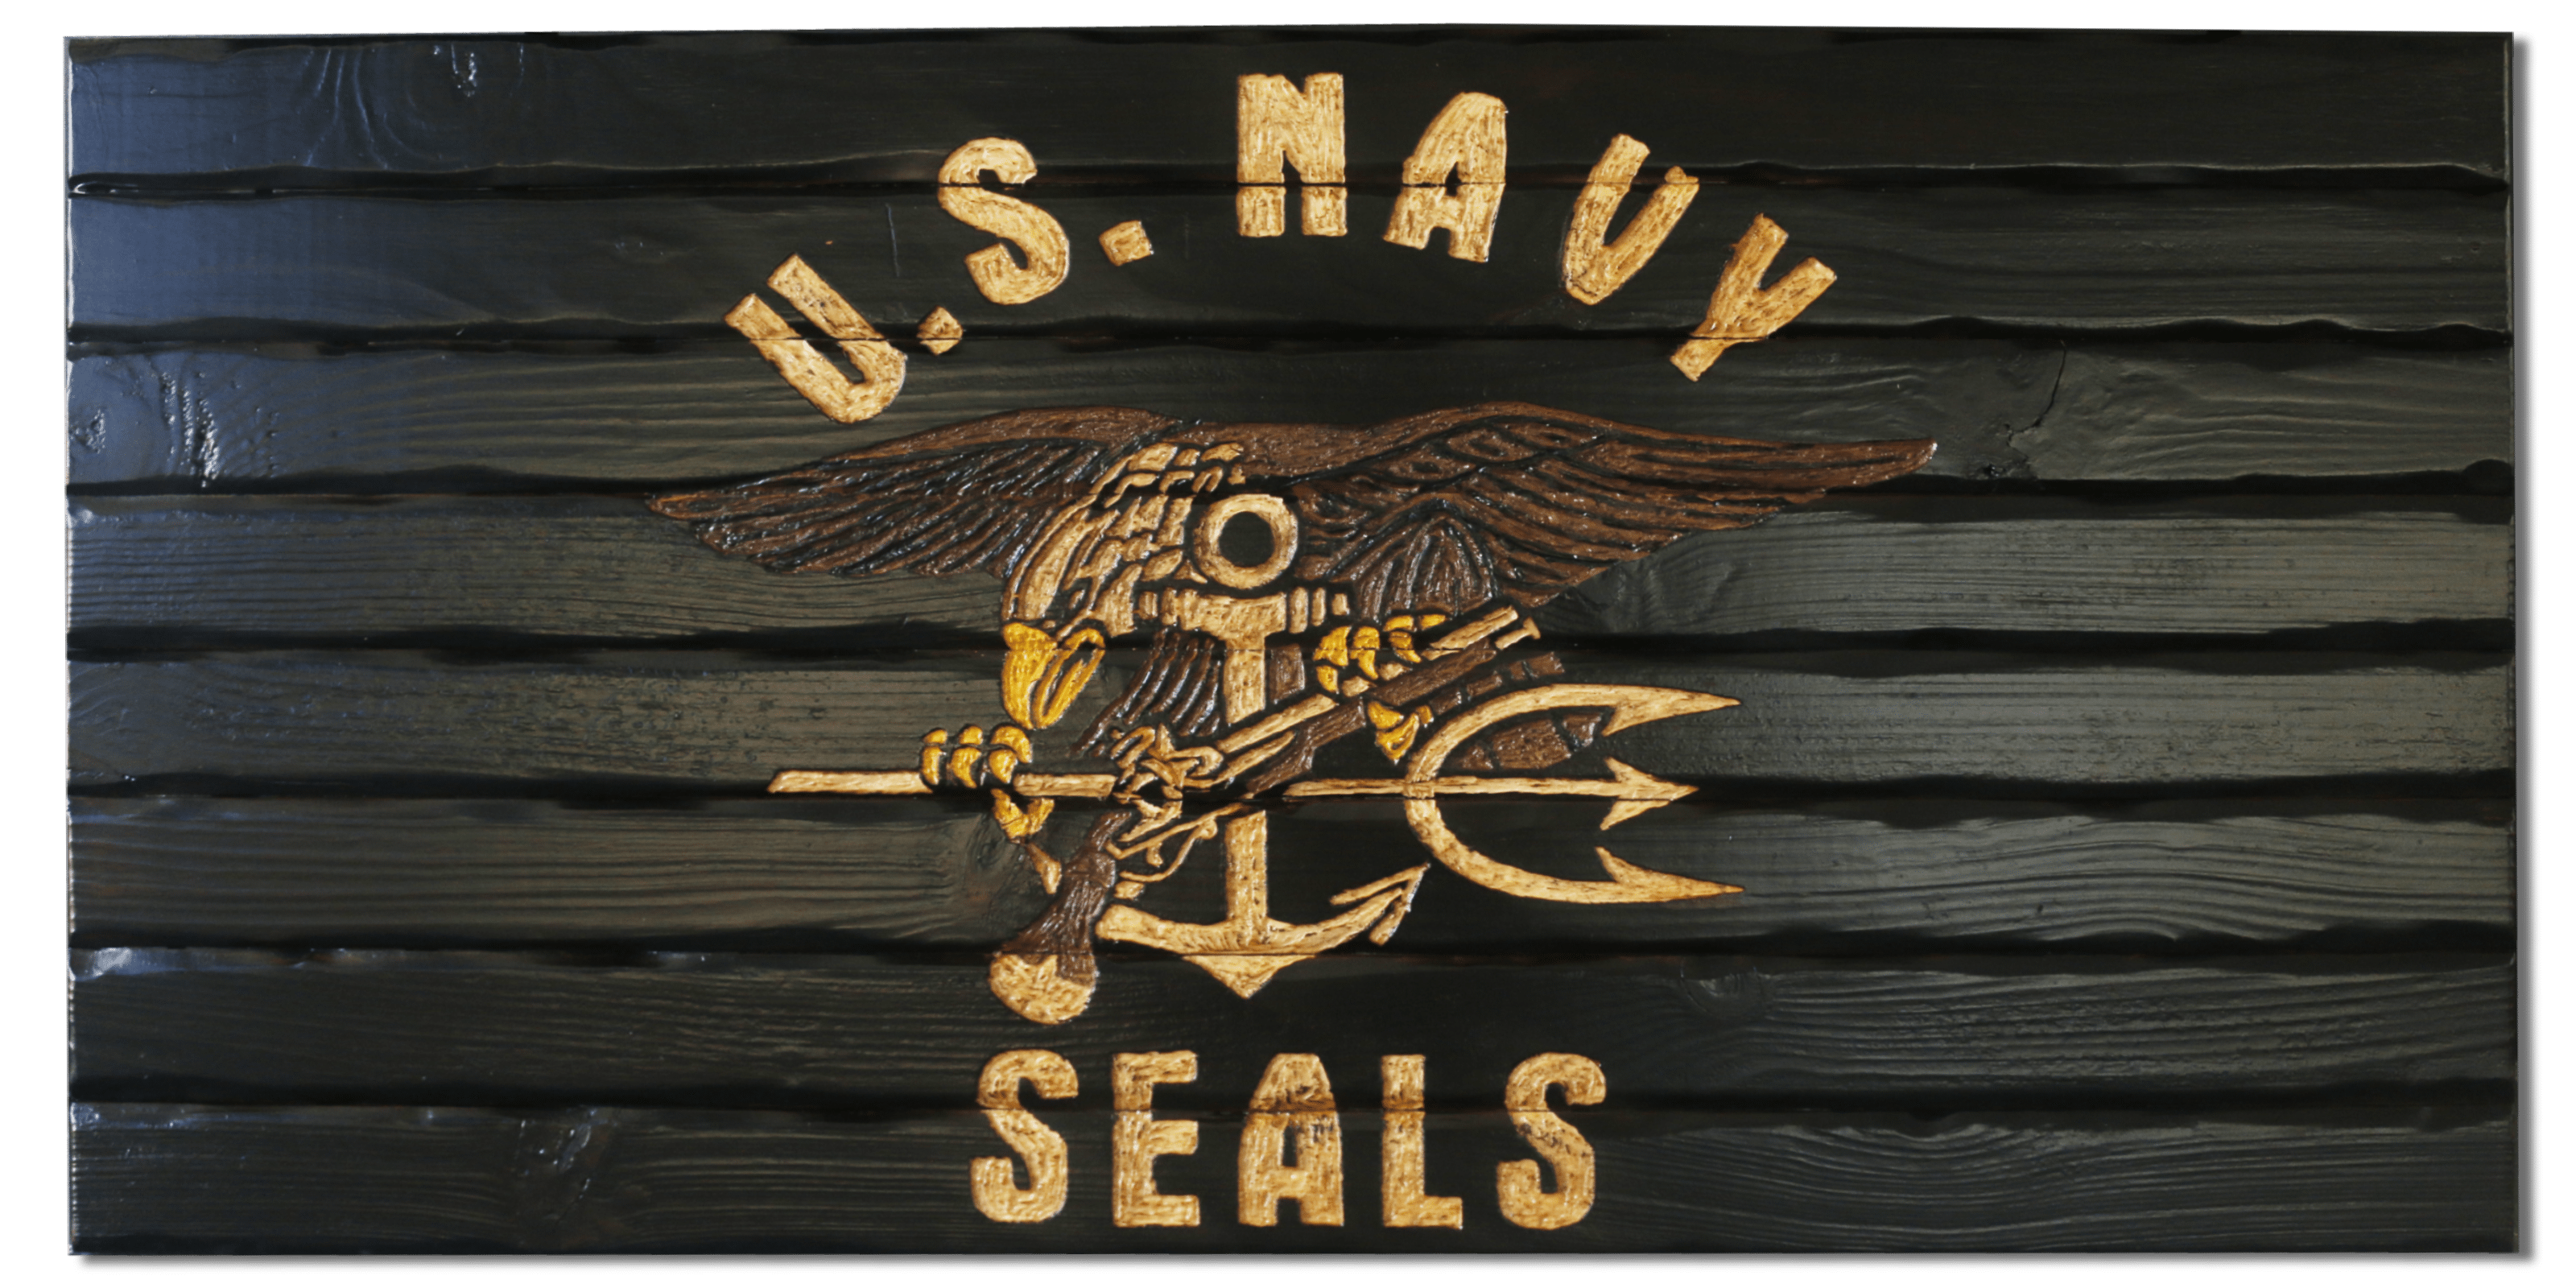 usn navy seal flag